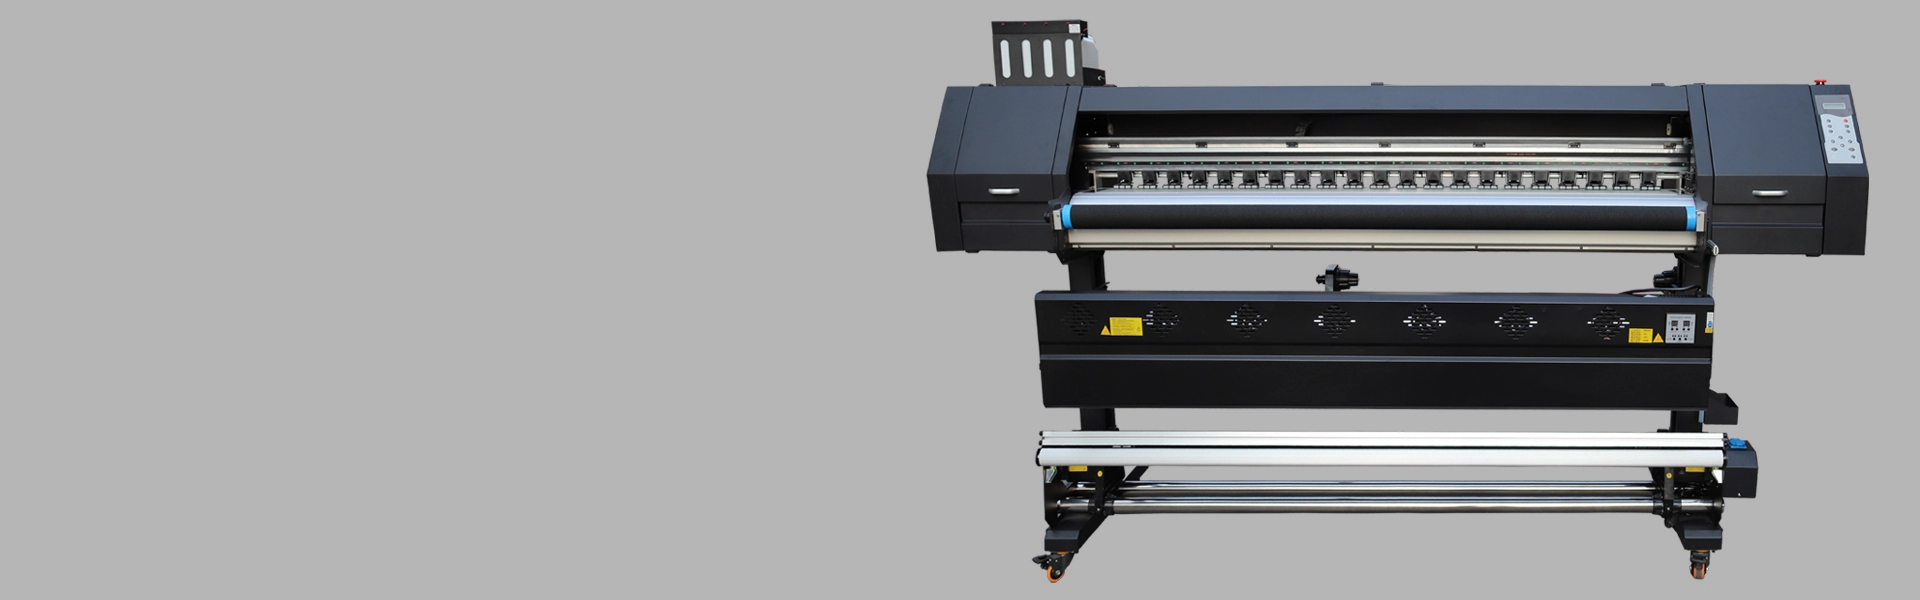 I3200 Sublimationsdrucker OLLIN-E1804